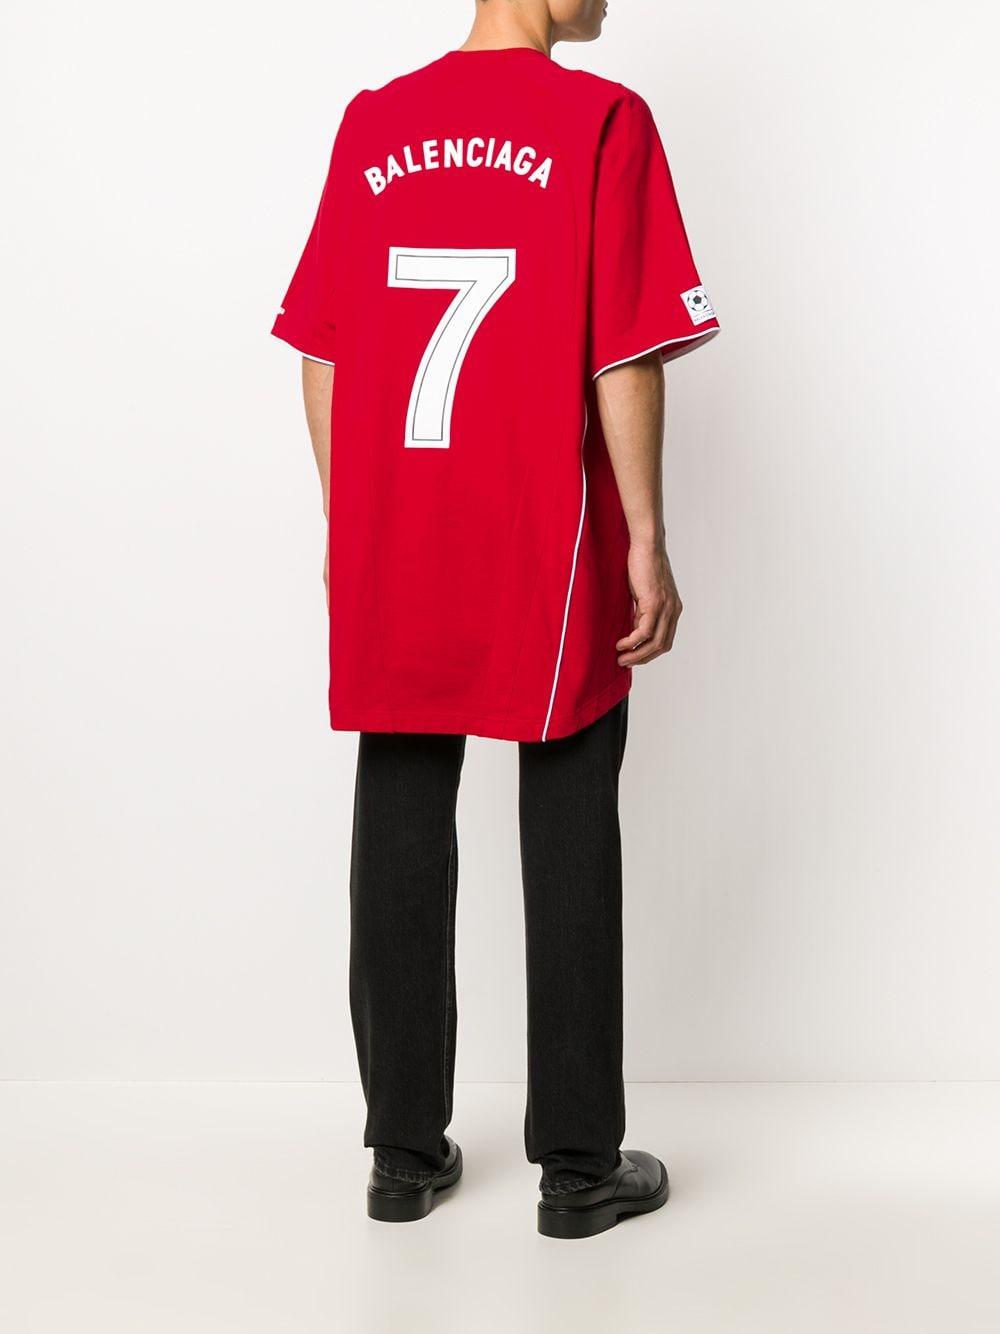 Balenciaga Cotton Logo-print Football T-shirt in Red for Men - Lyst